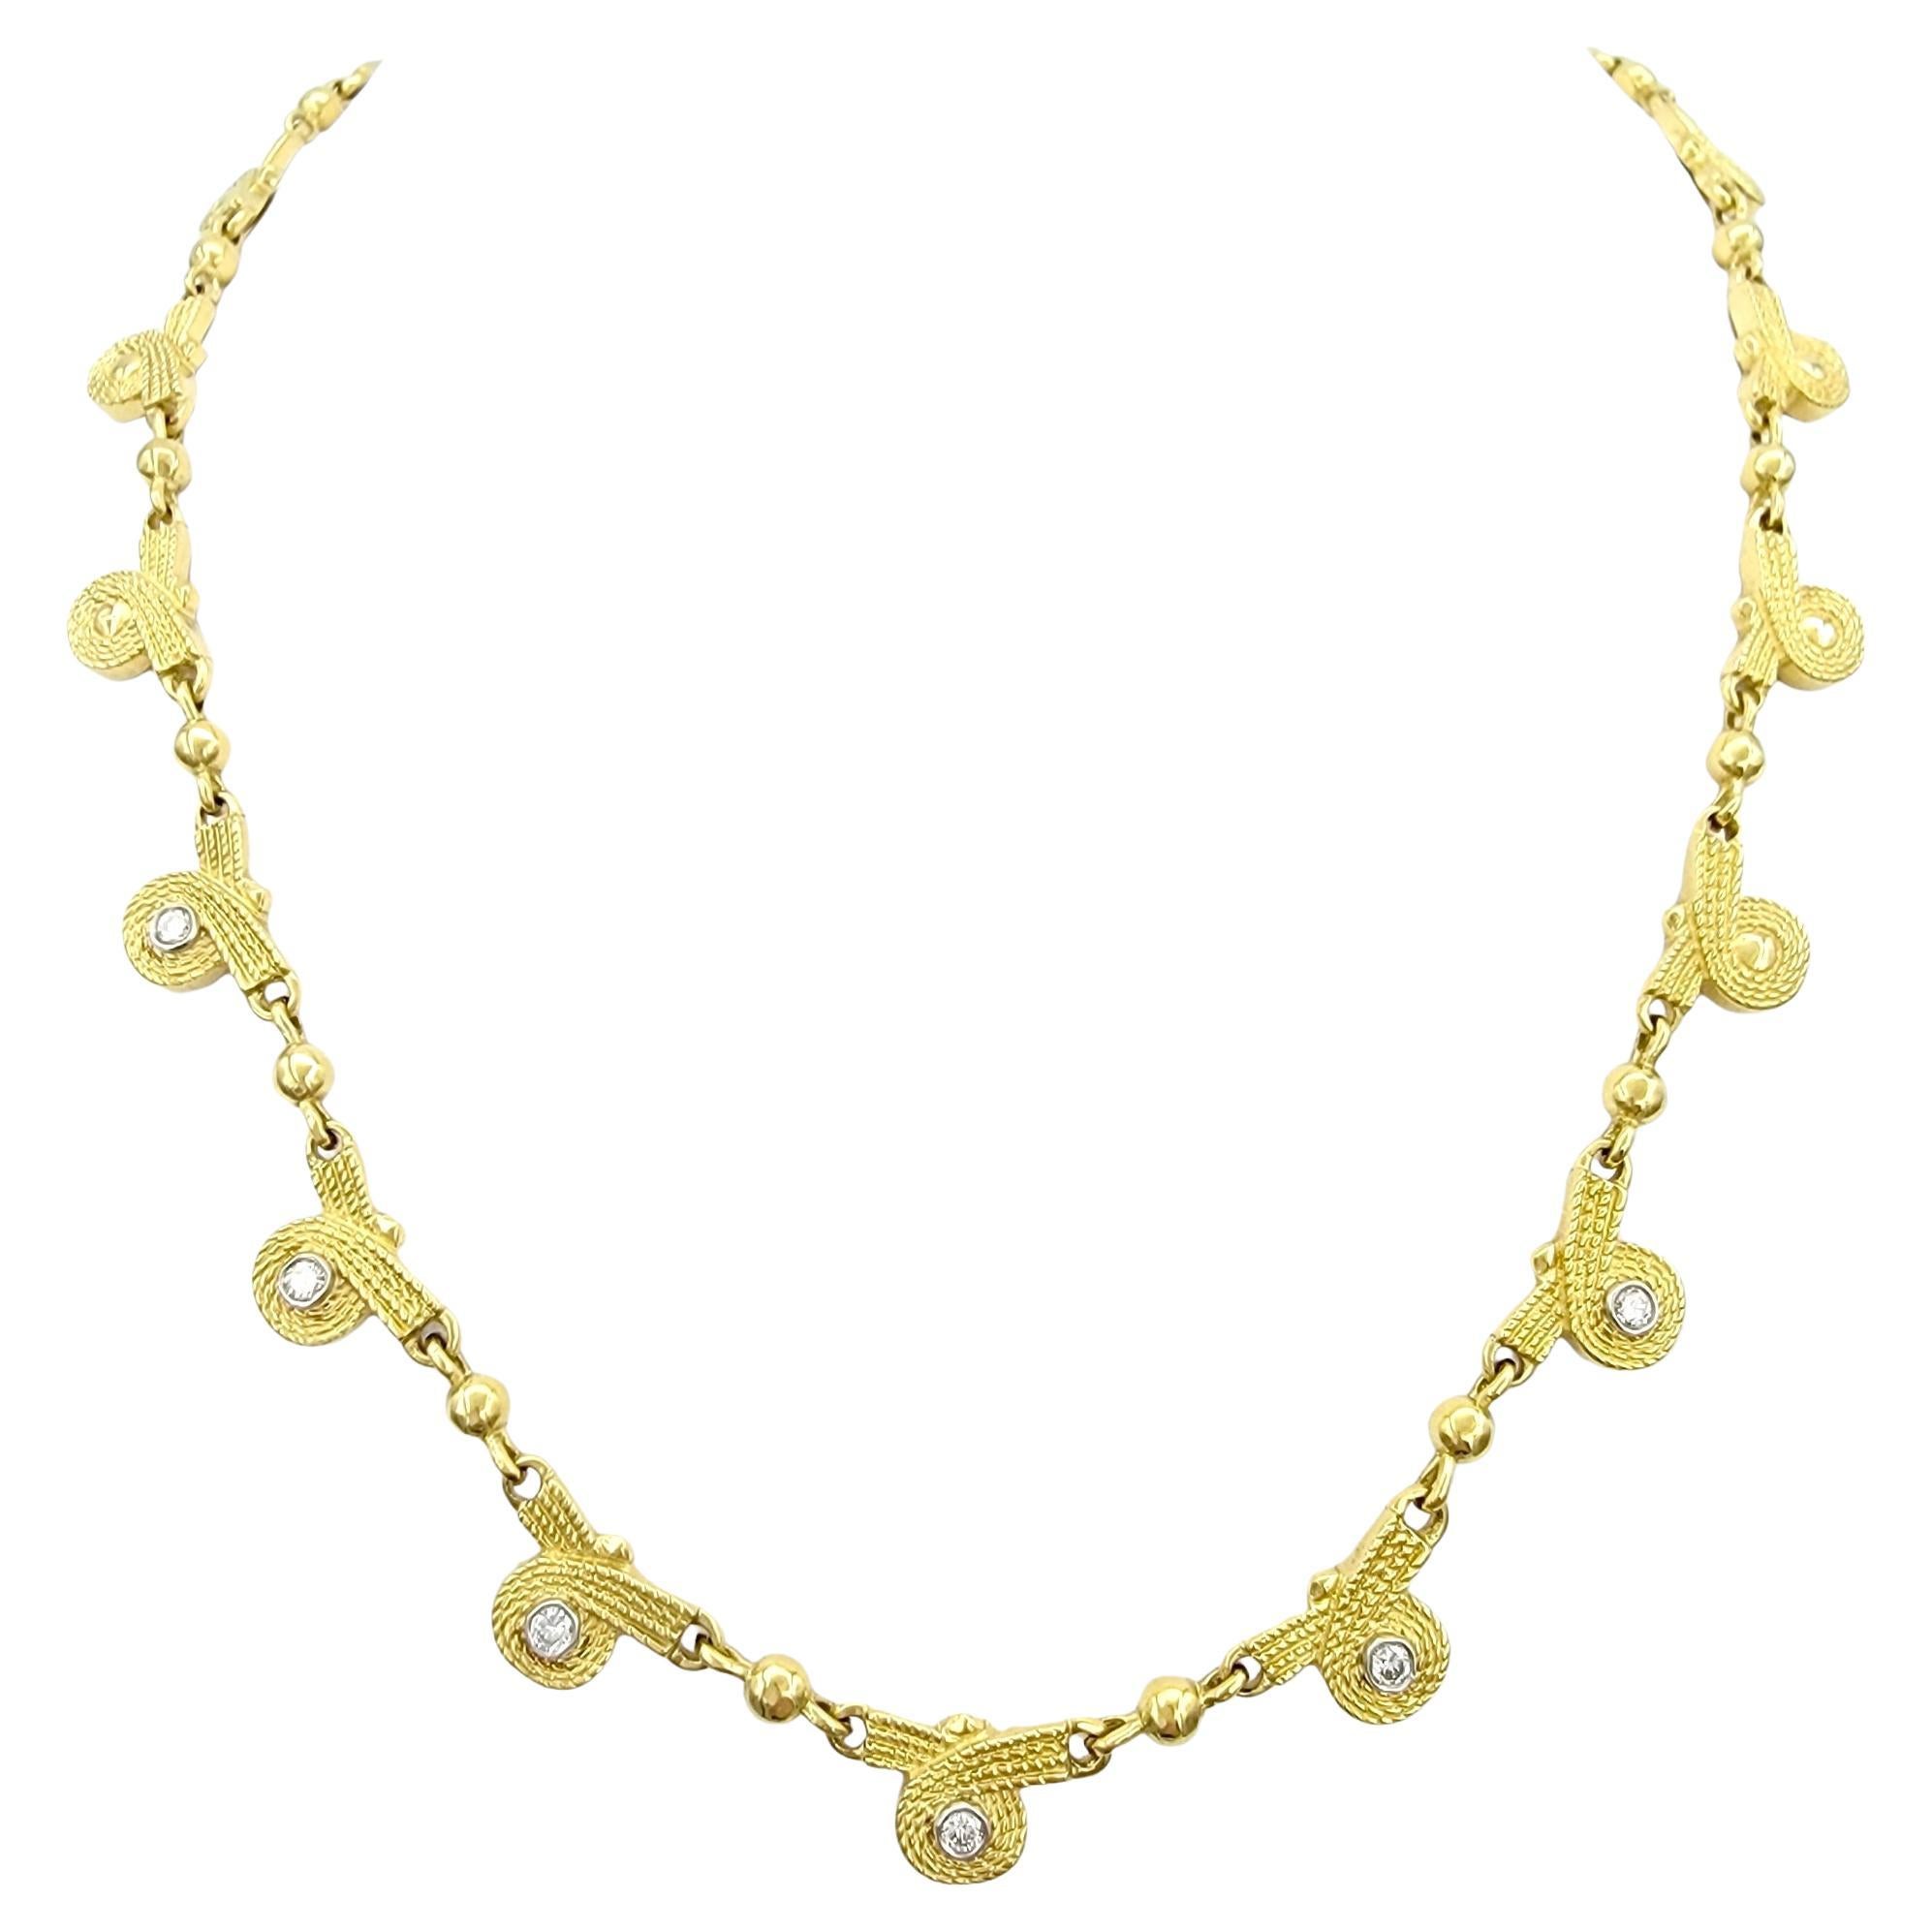 J.J. Marco 'Illuminated Braids' 18 Karat Yellow Gold Link Necklace with Diamonds